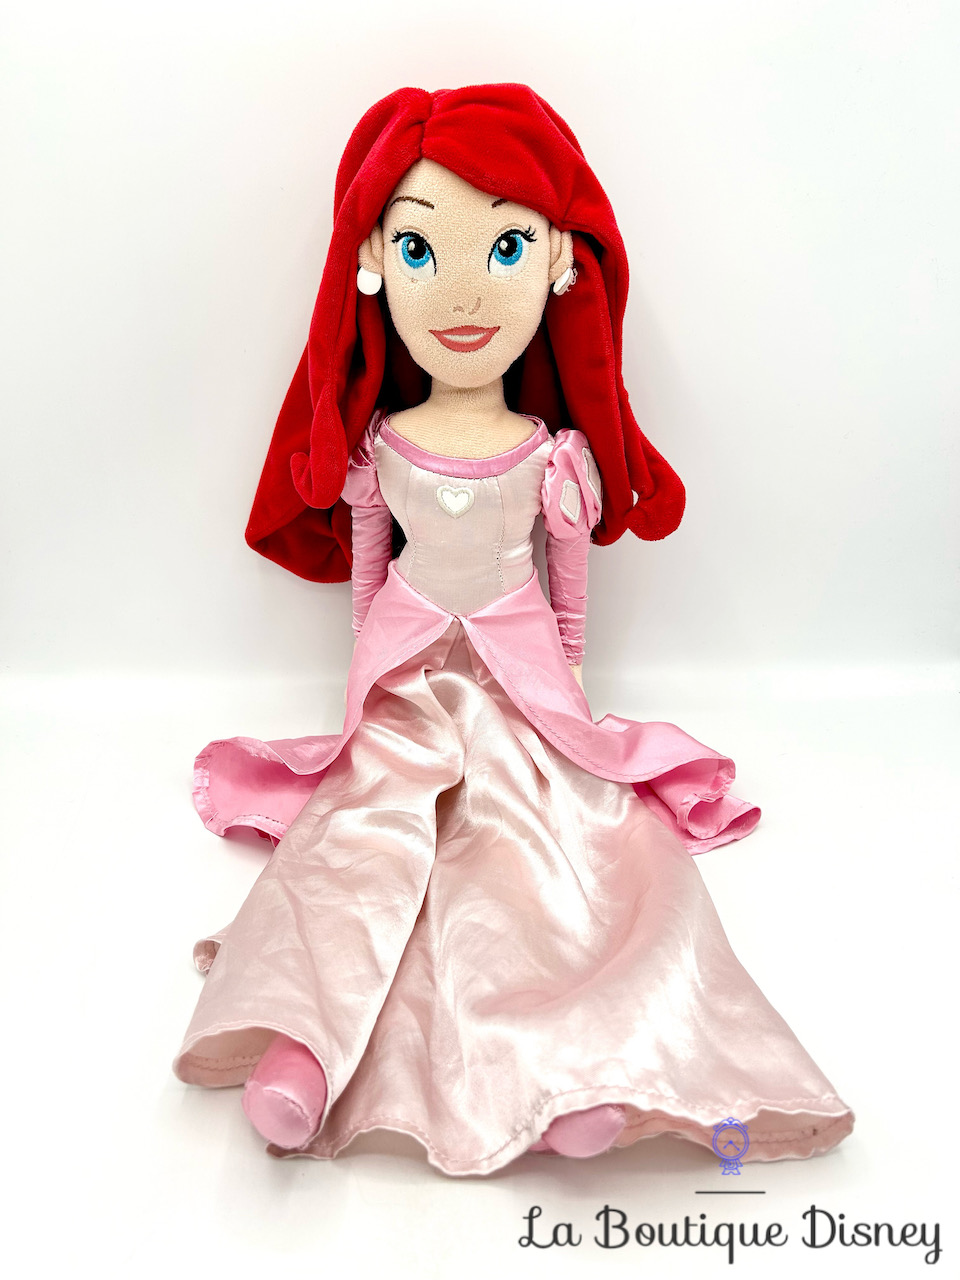 Poupée chiffon Ariel robe rose La petite sirène Disney Store 2015 peluche princesse 53 cm